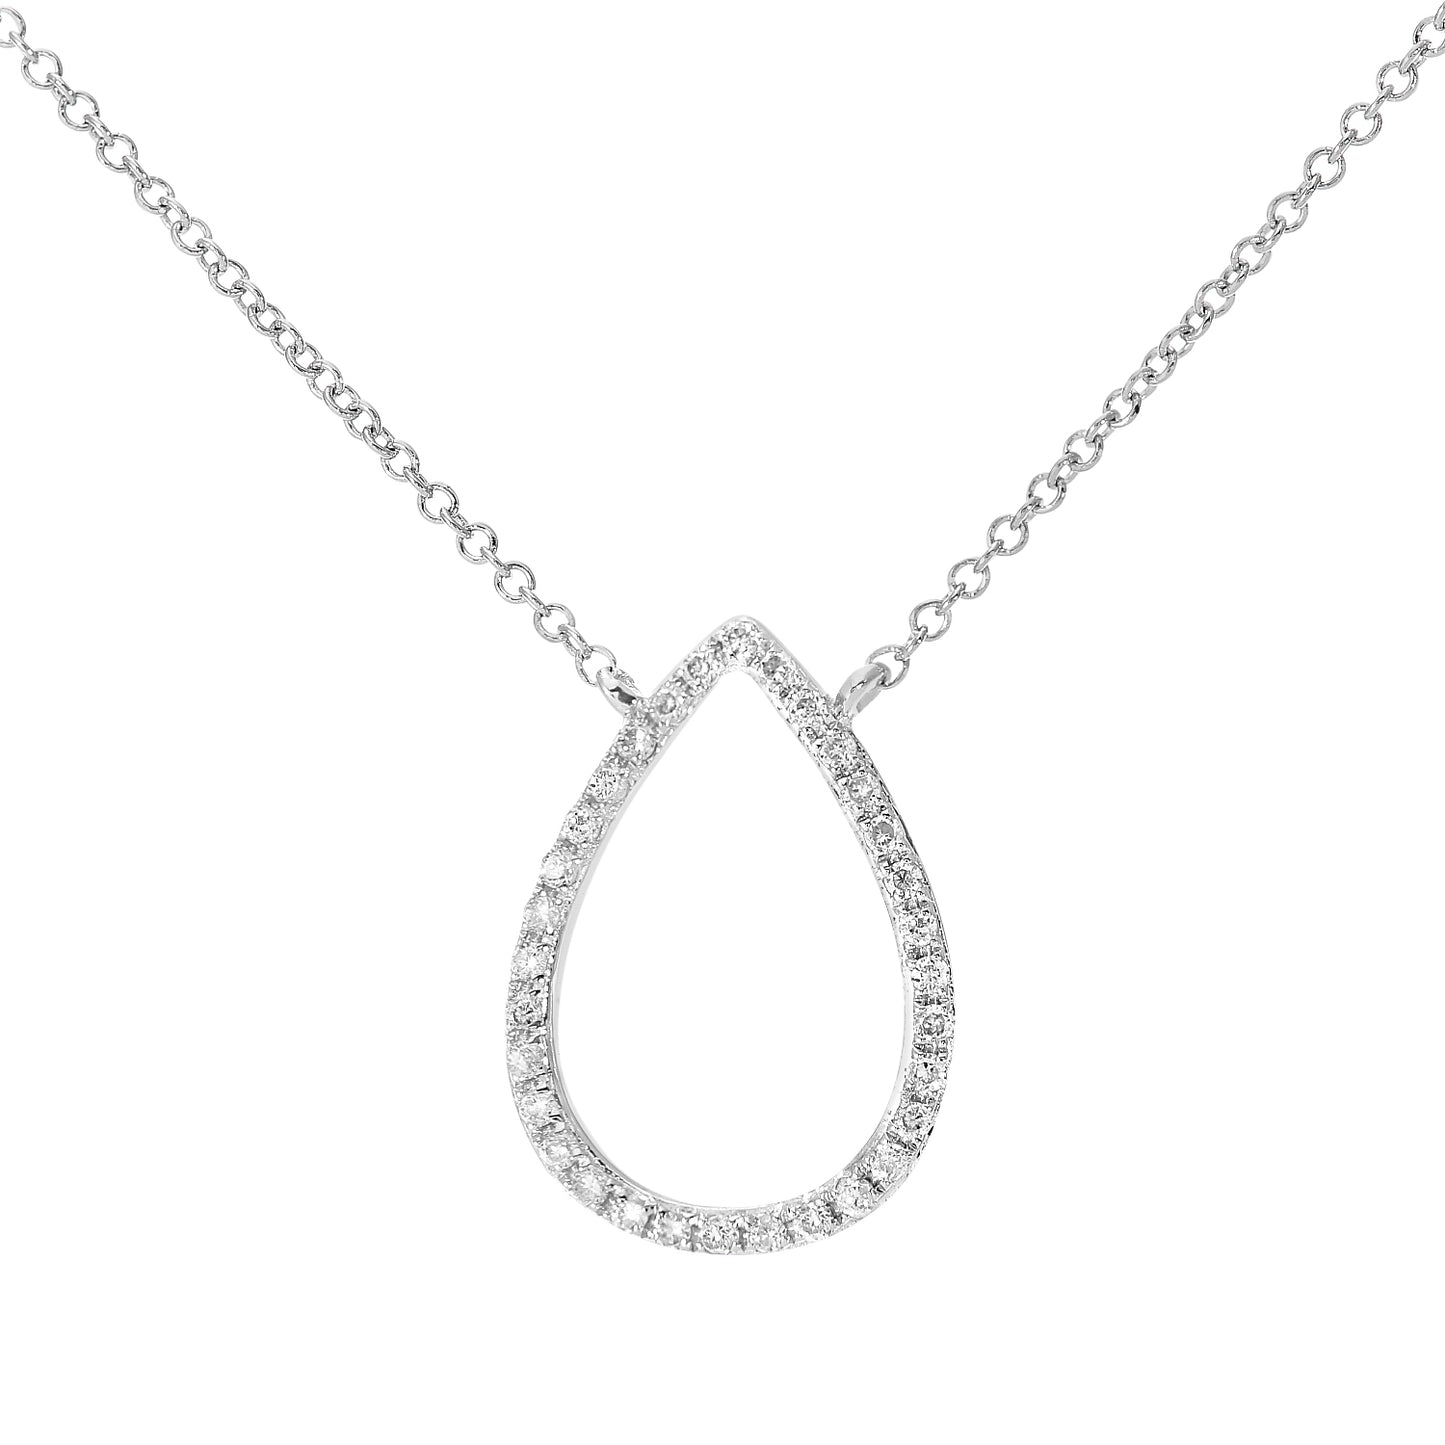 9ct White Gold  10pts Diamond Teardrop Pendant Necklace 16 inch - DP1AXL521W